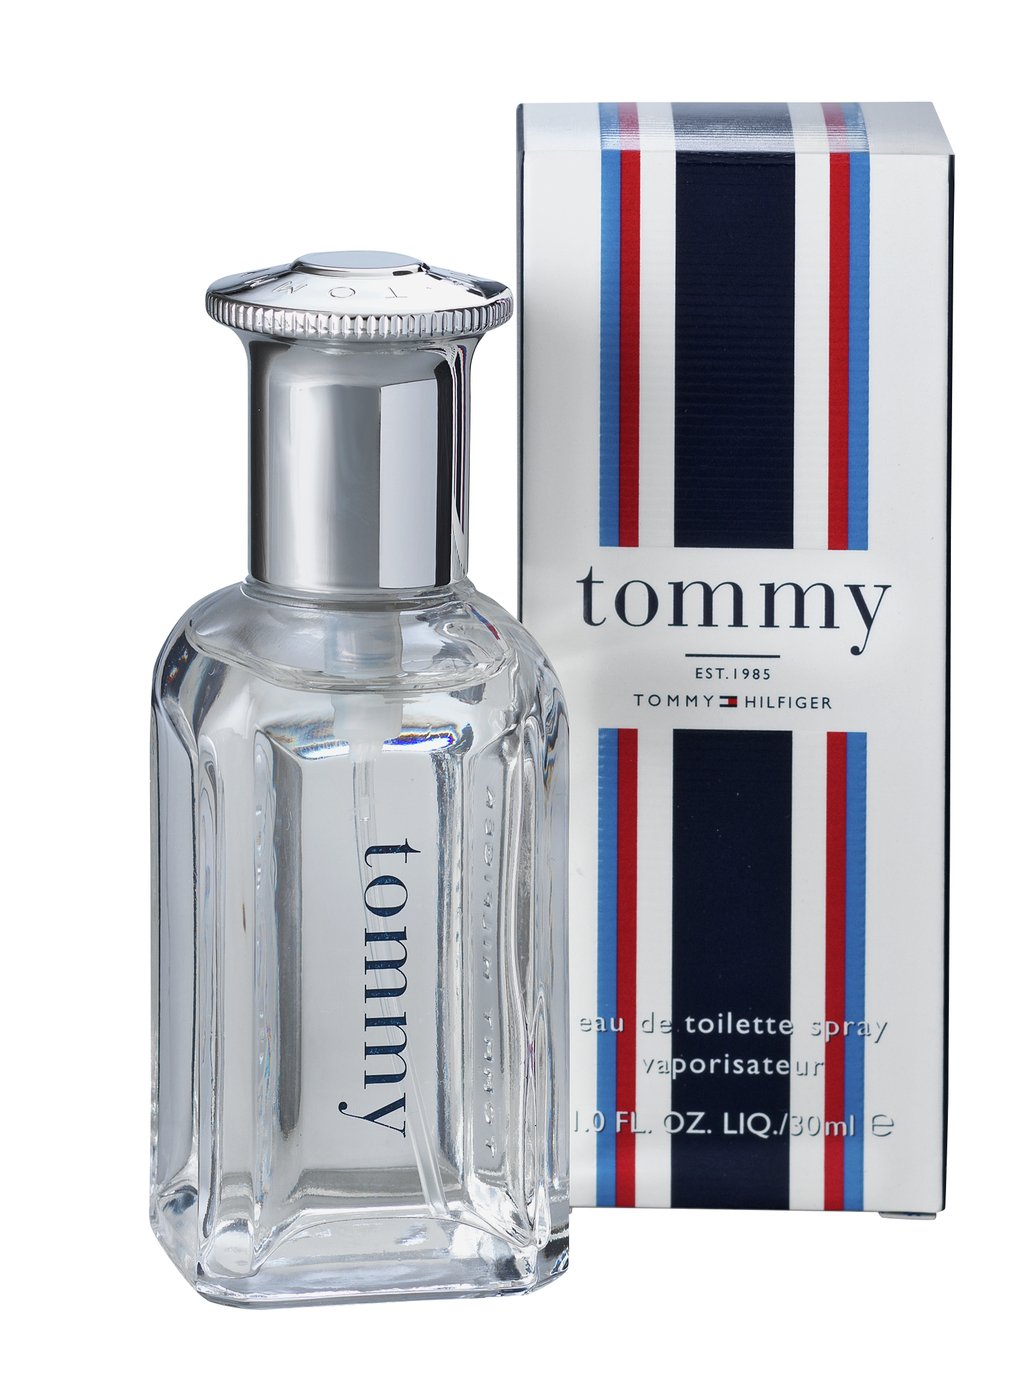 tommy girl perfume argos